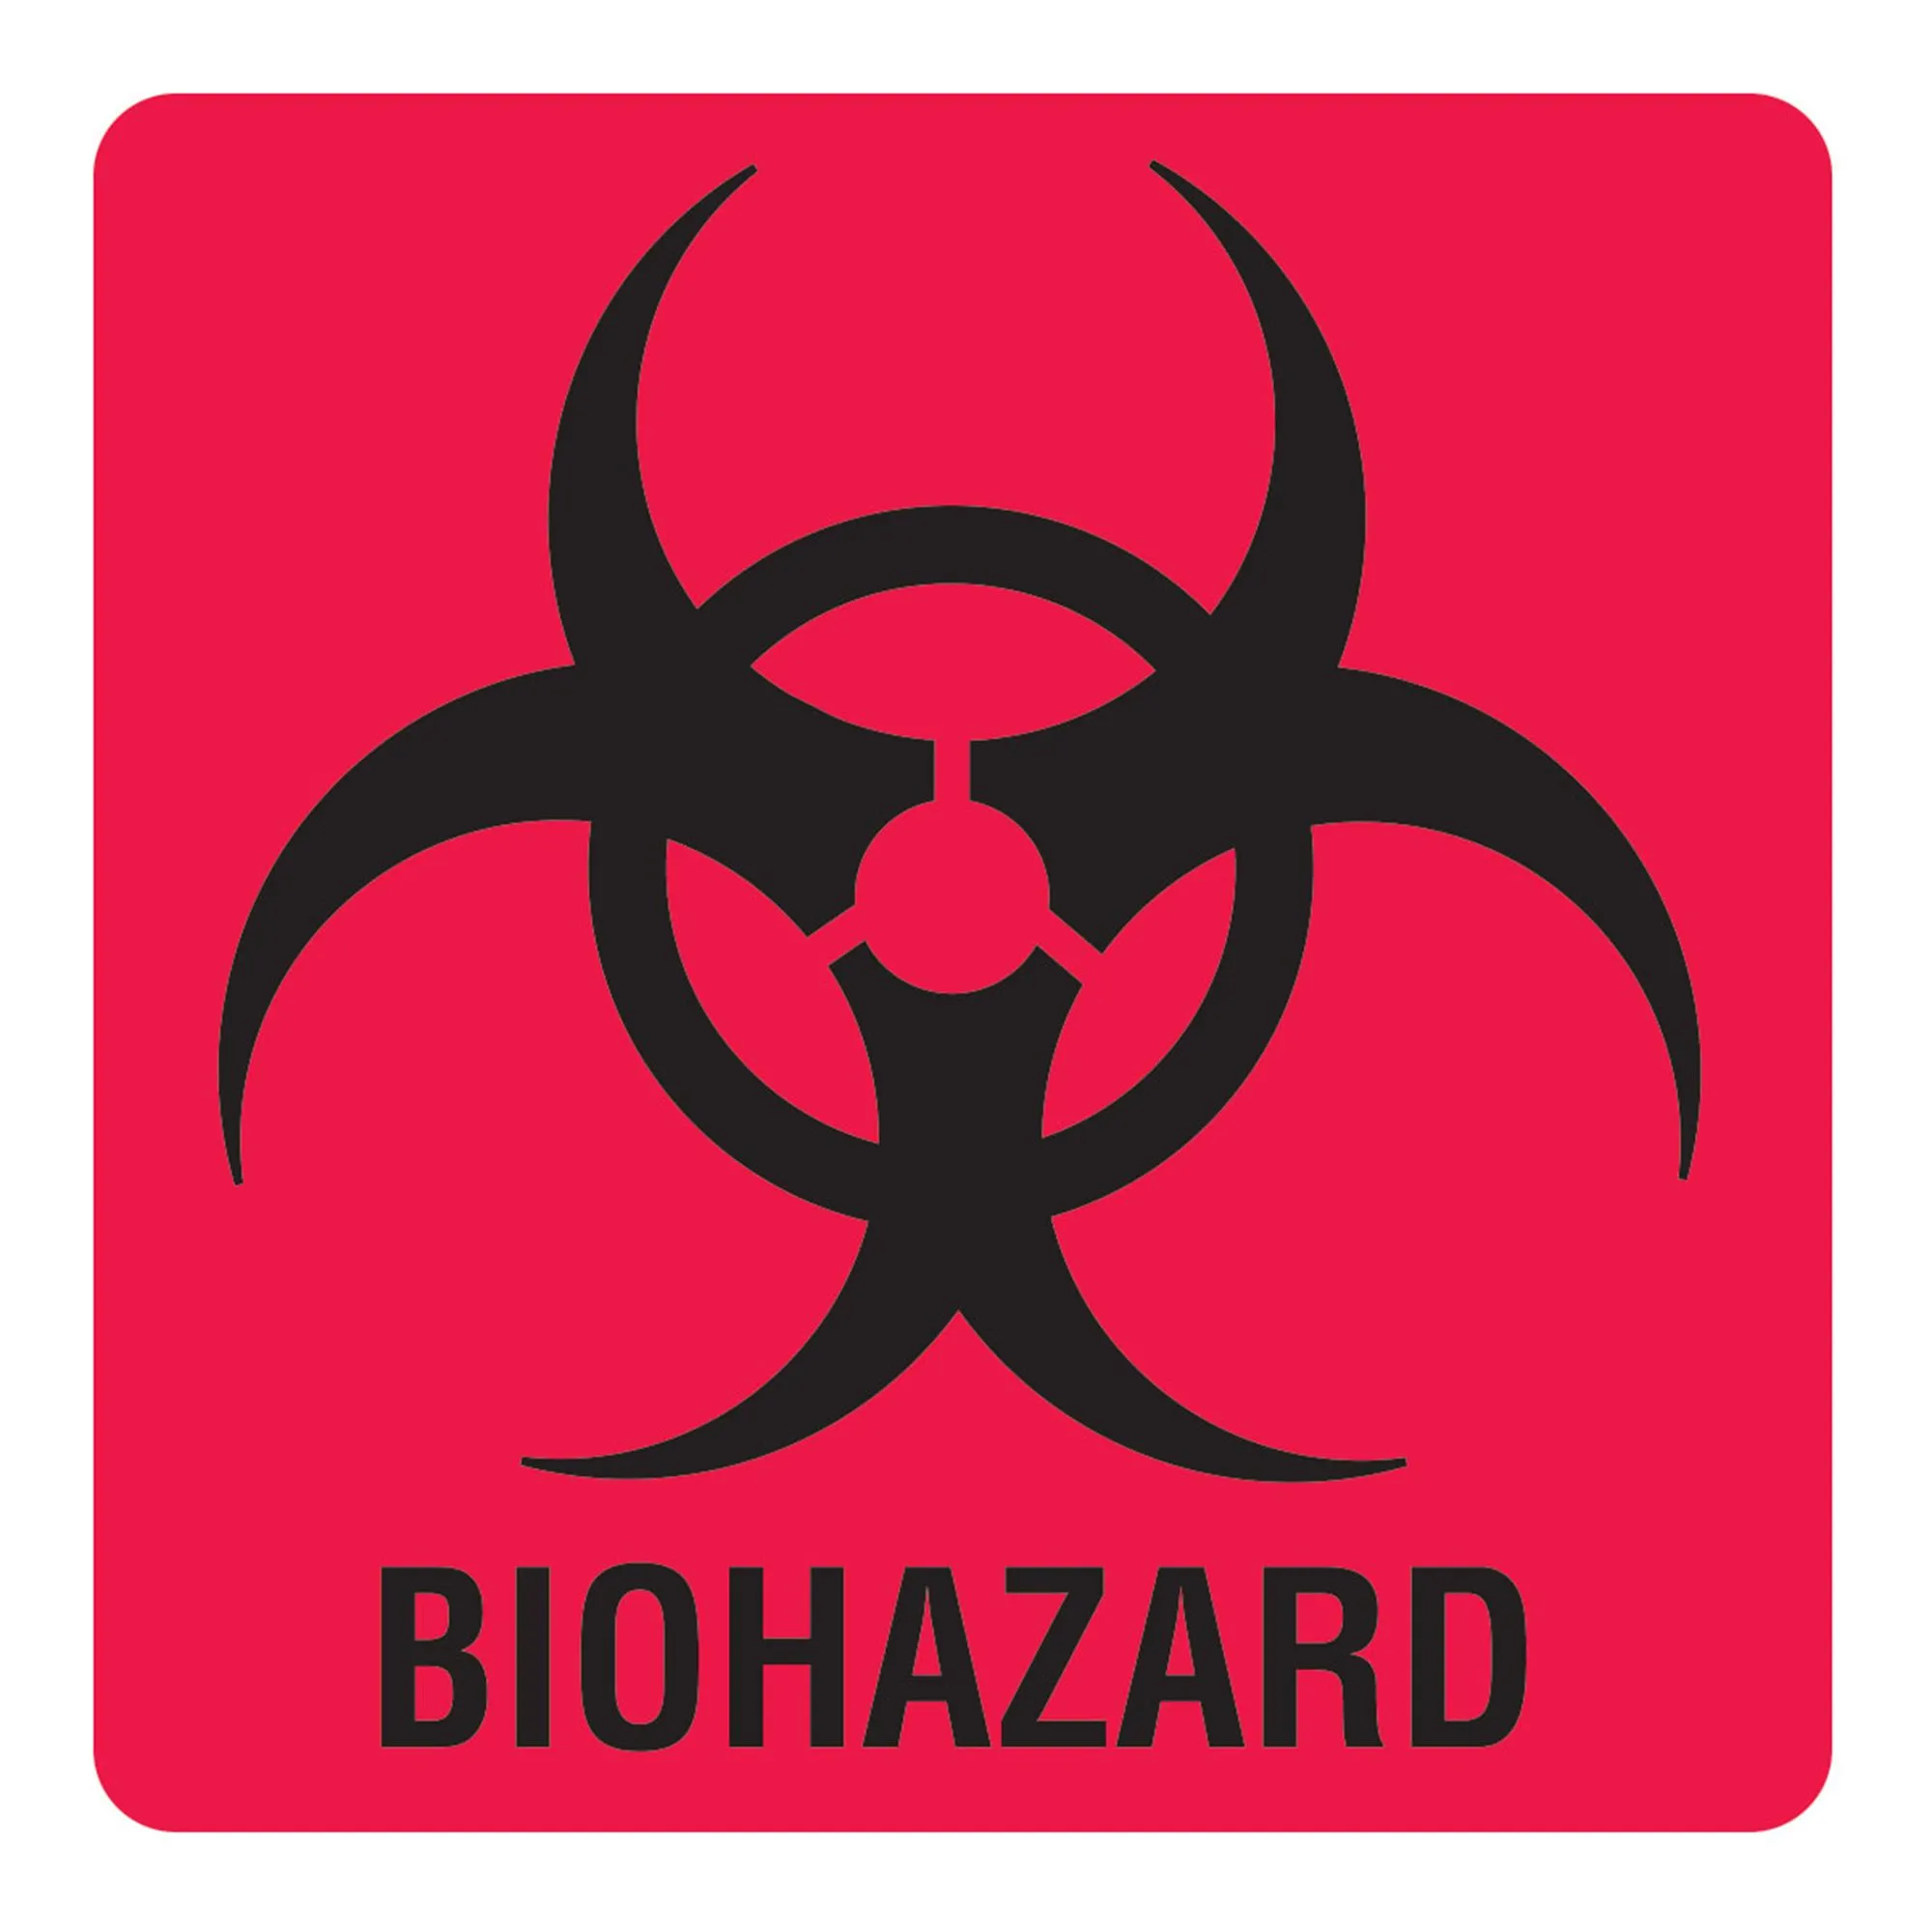 Black biohazard symbol on red background. 